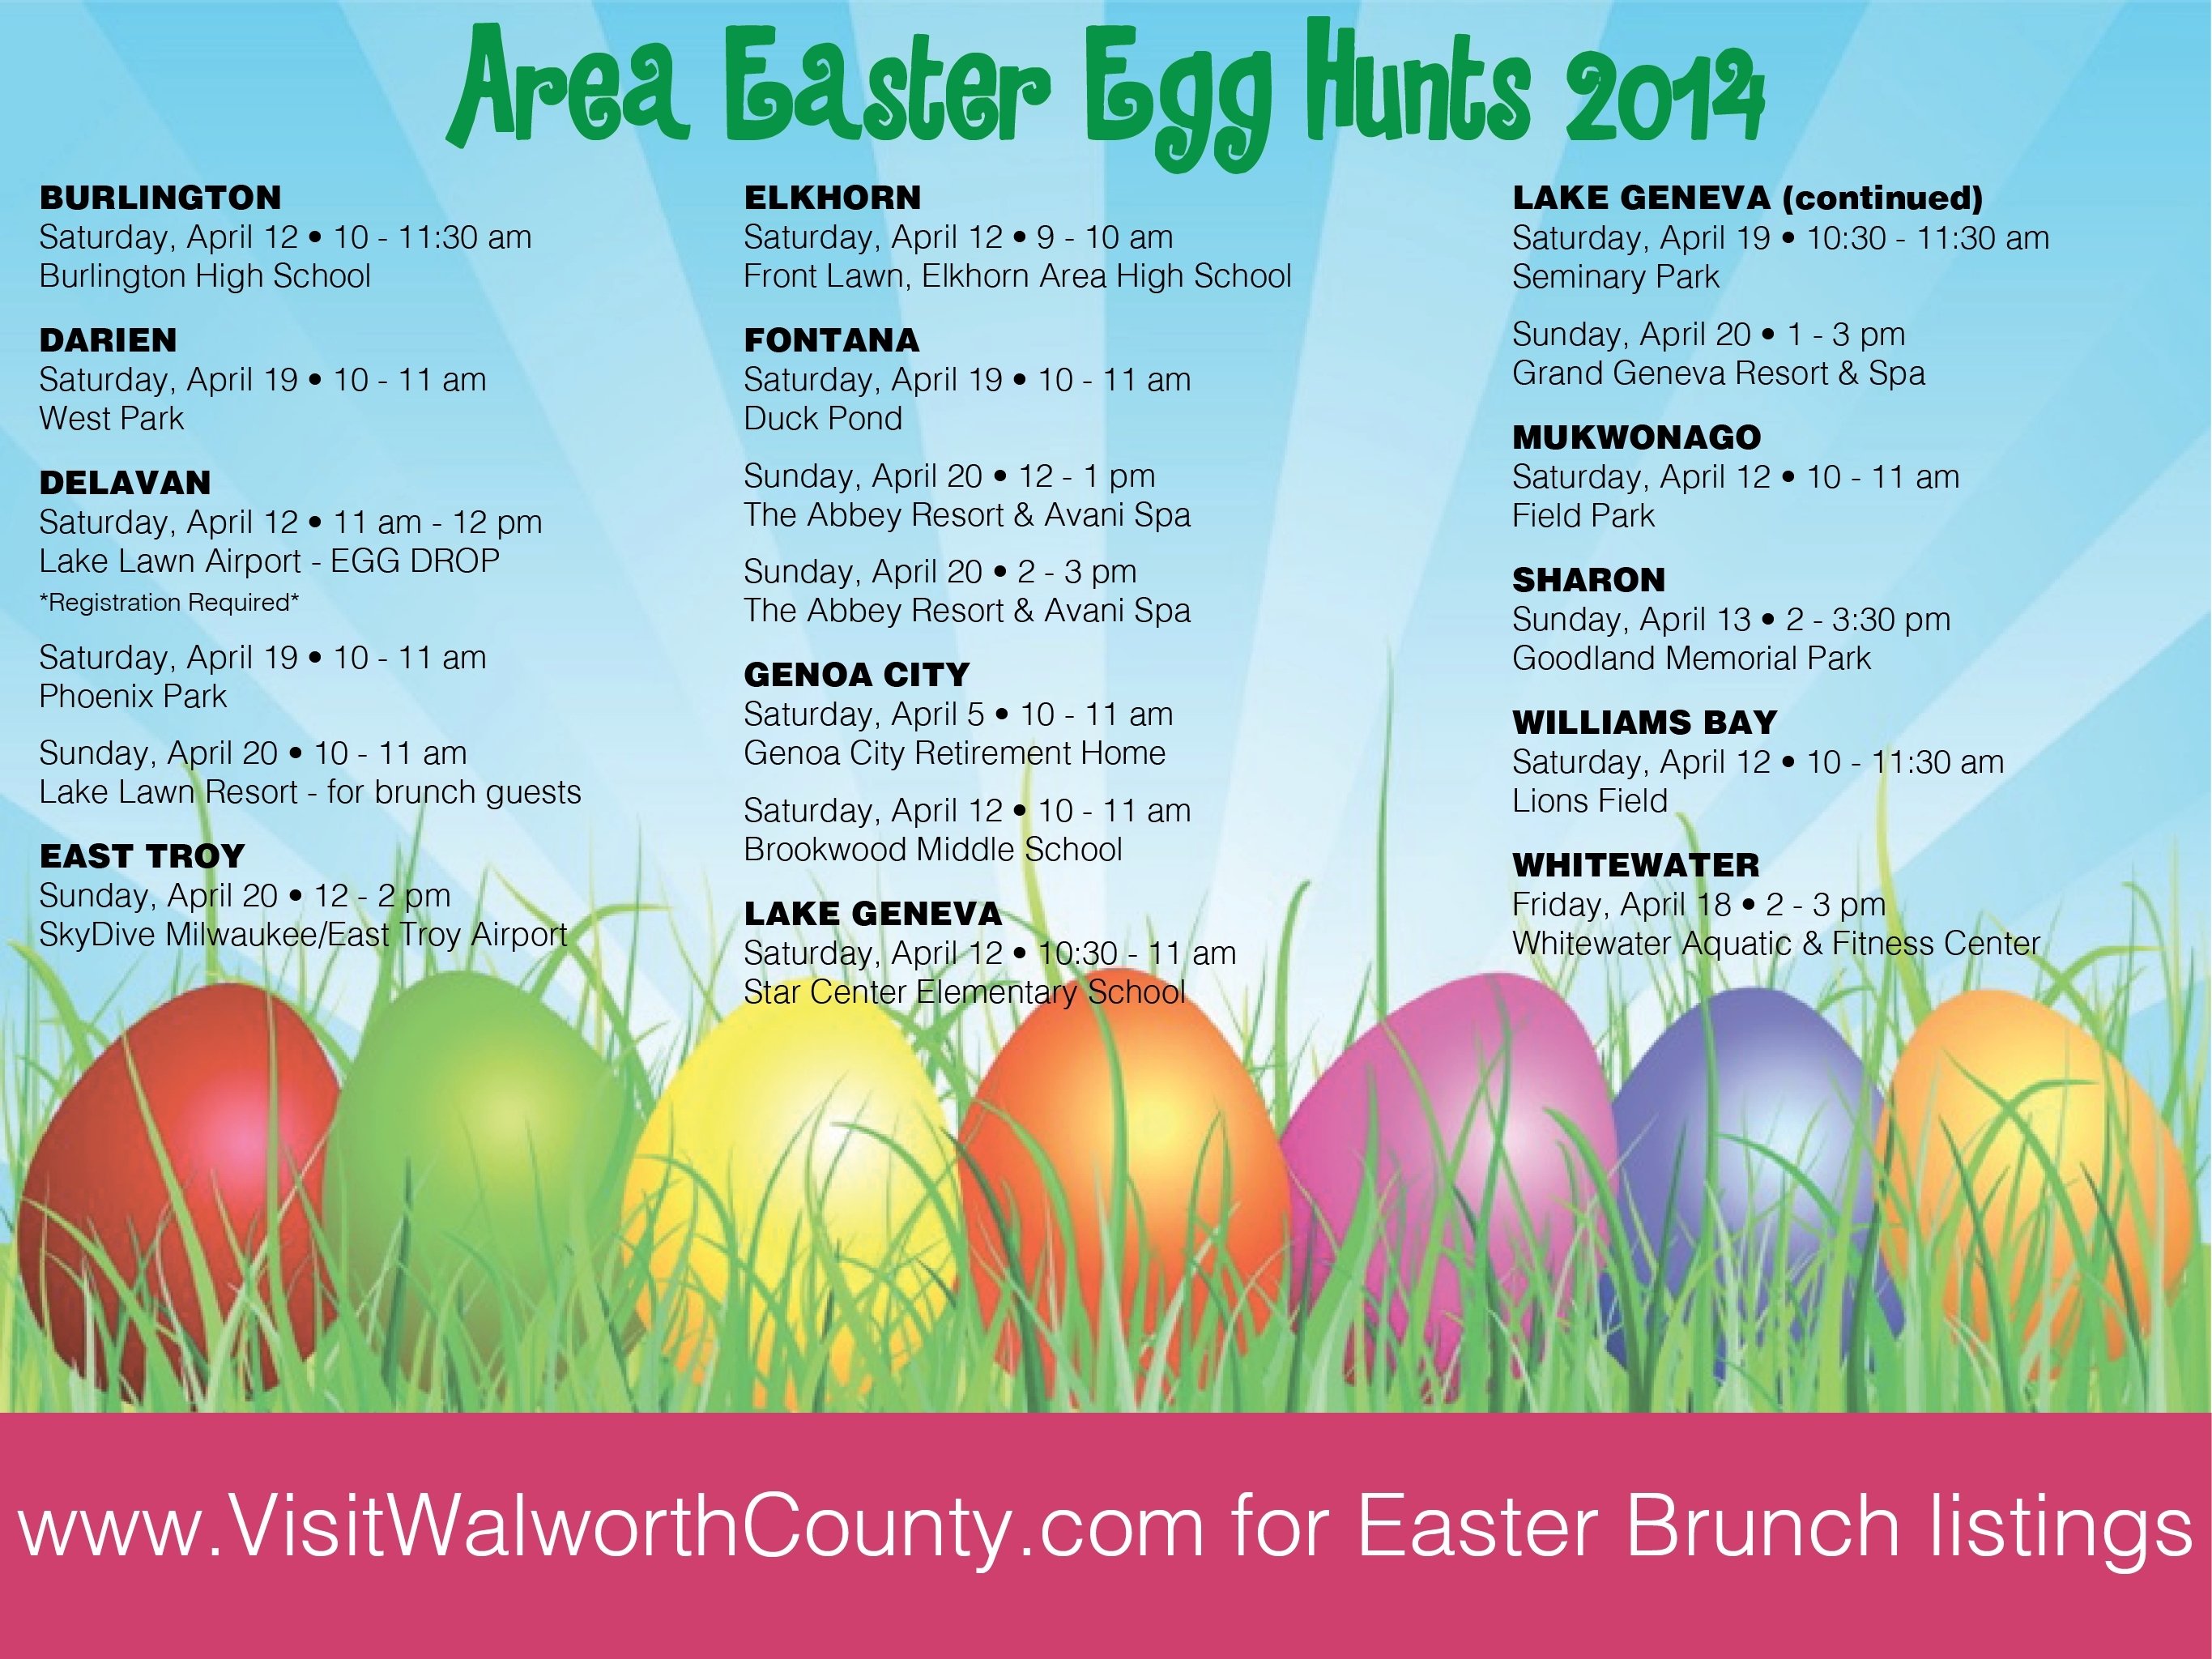 10 Lovely Adult Easter Egg Hunt Ideas eggs cellent fun in walworth county easter egg hunts 2014 2022